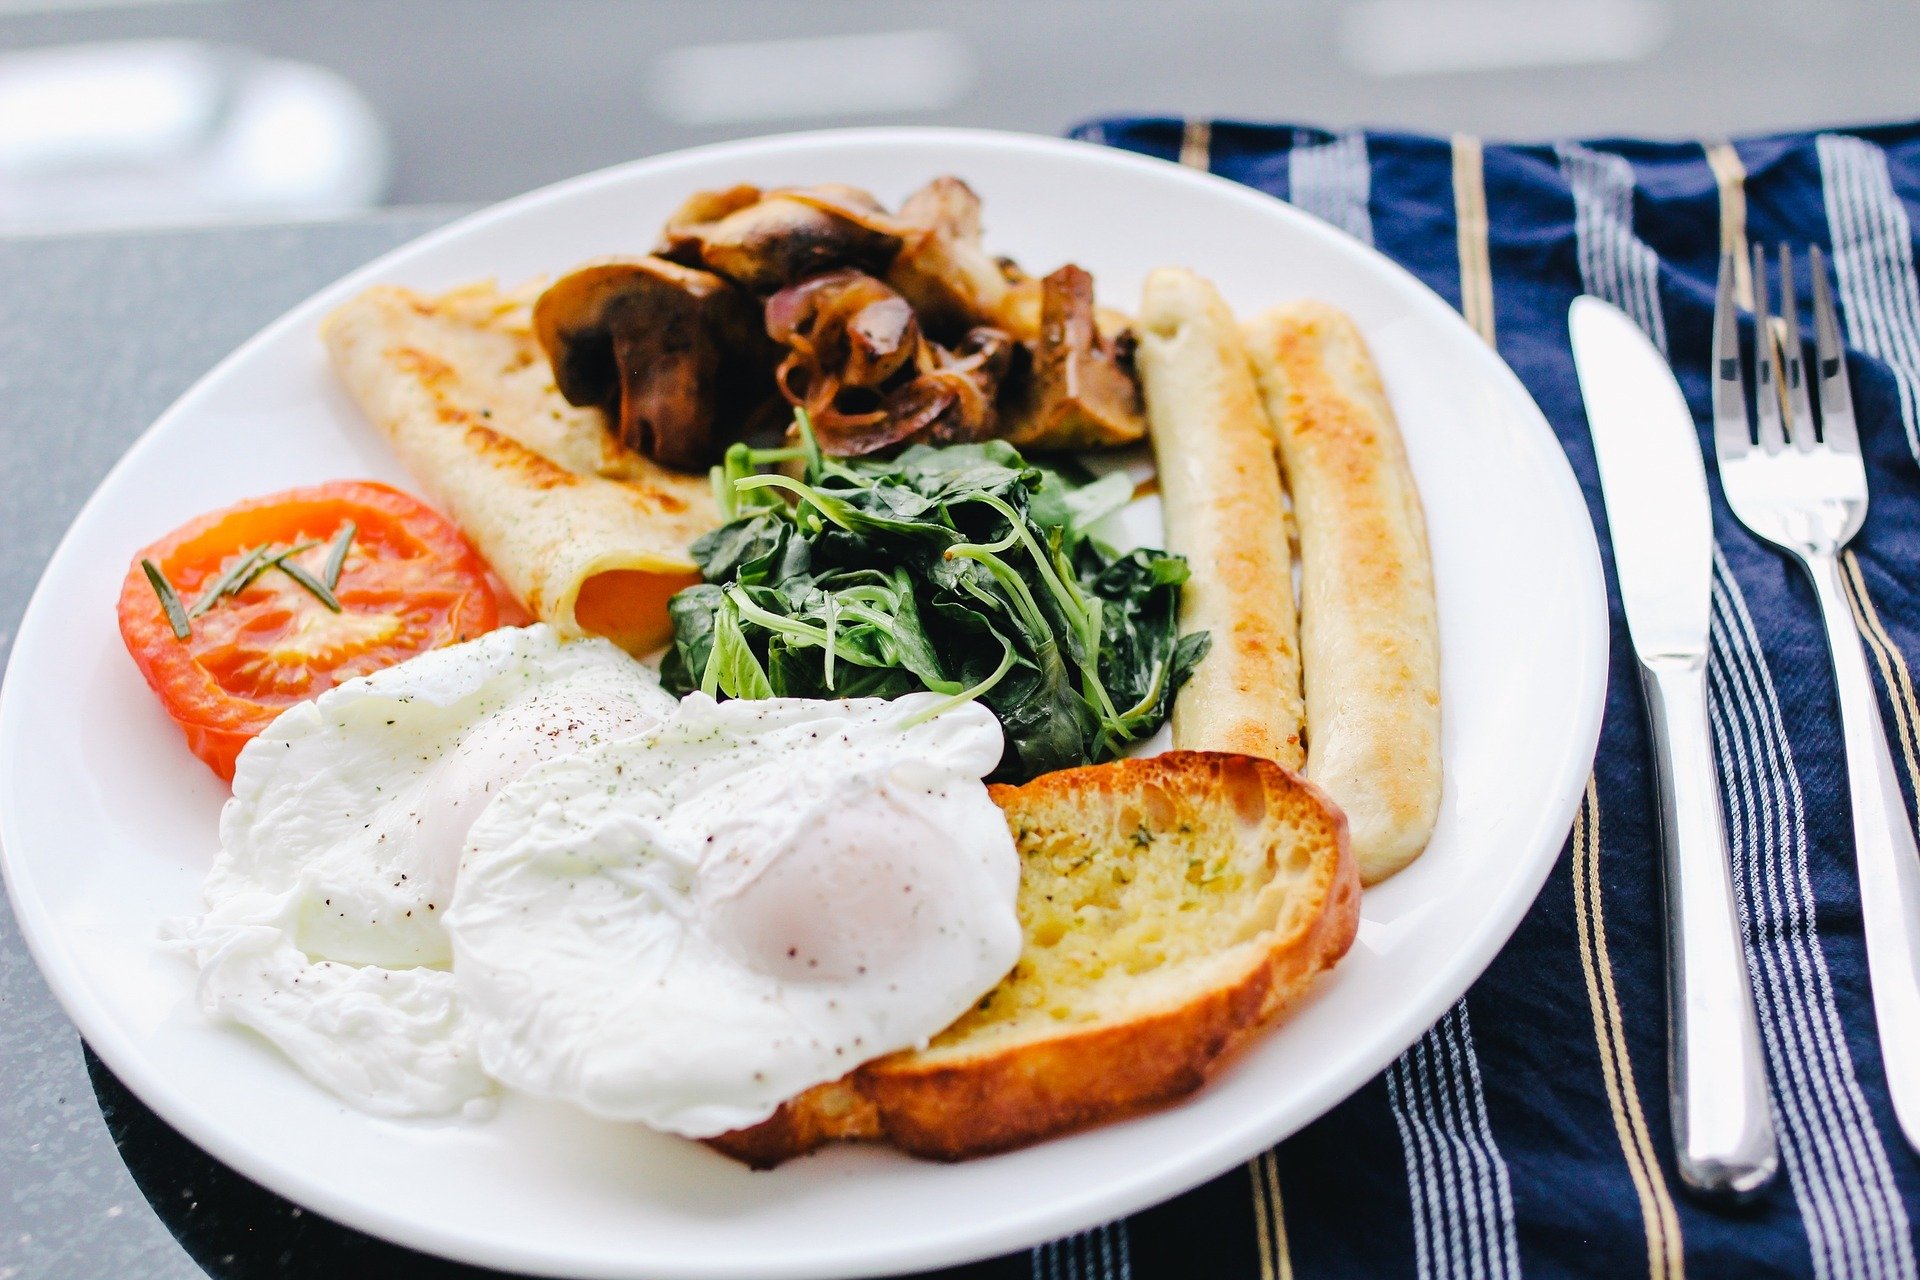 A 'big' breakfast can help burn more calories